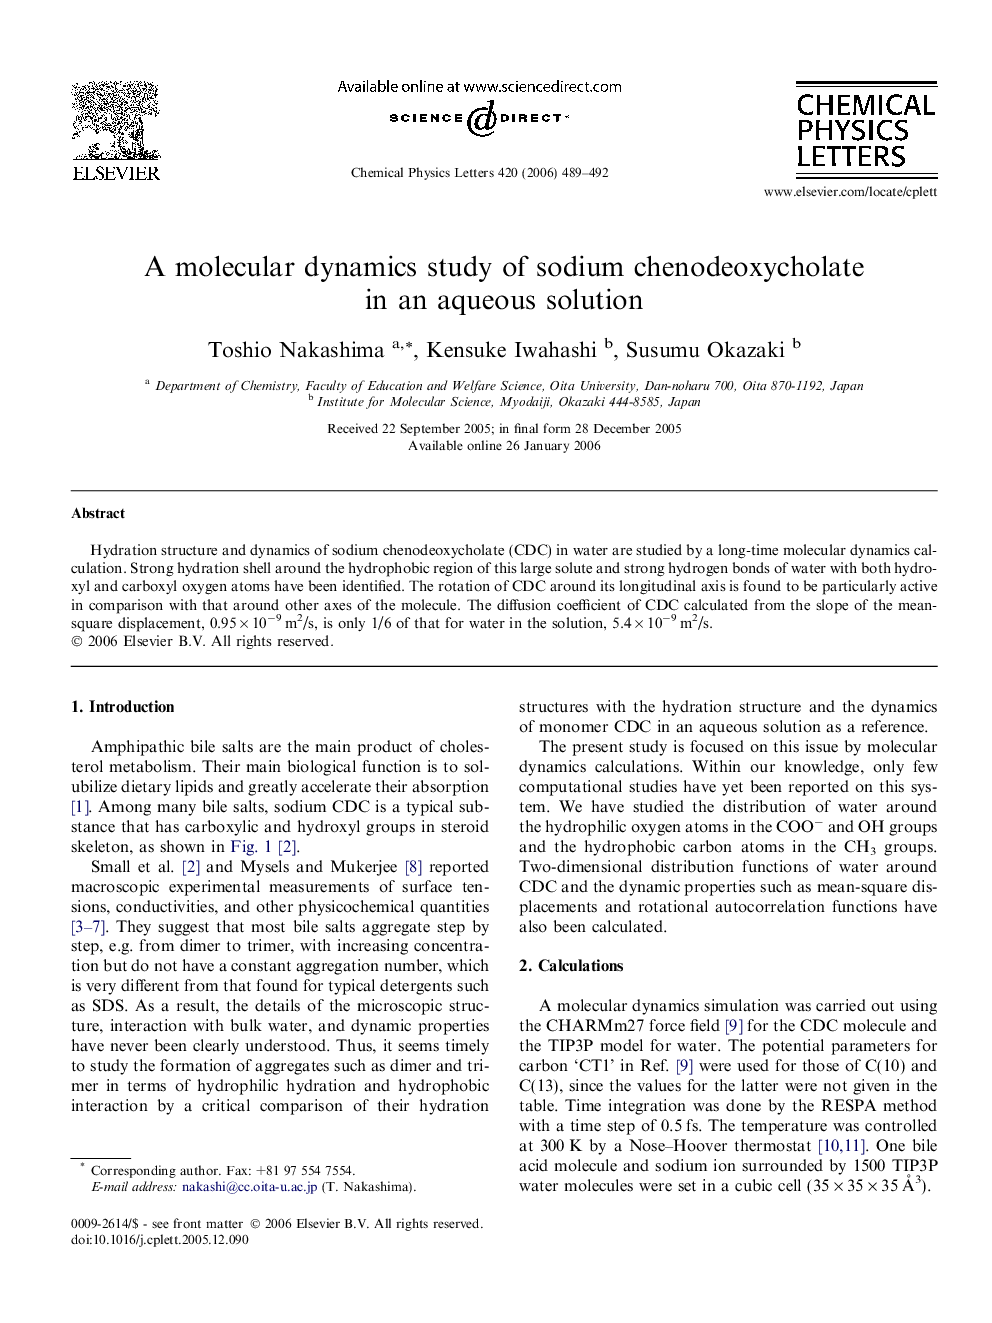 A molecular dynamics study of sodium chenodeoxycholate in an aqueous solution